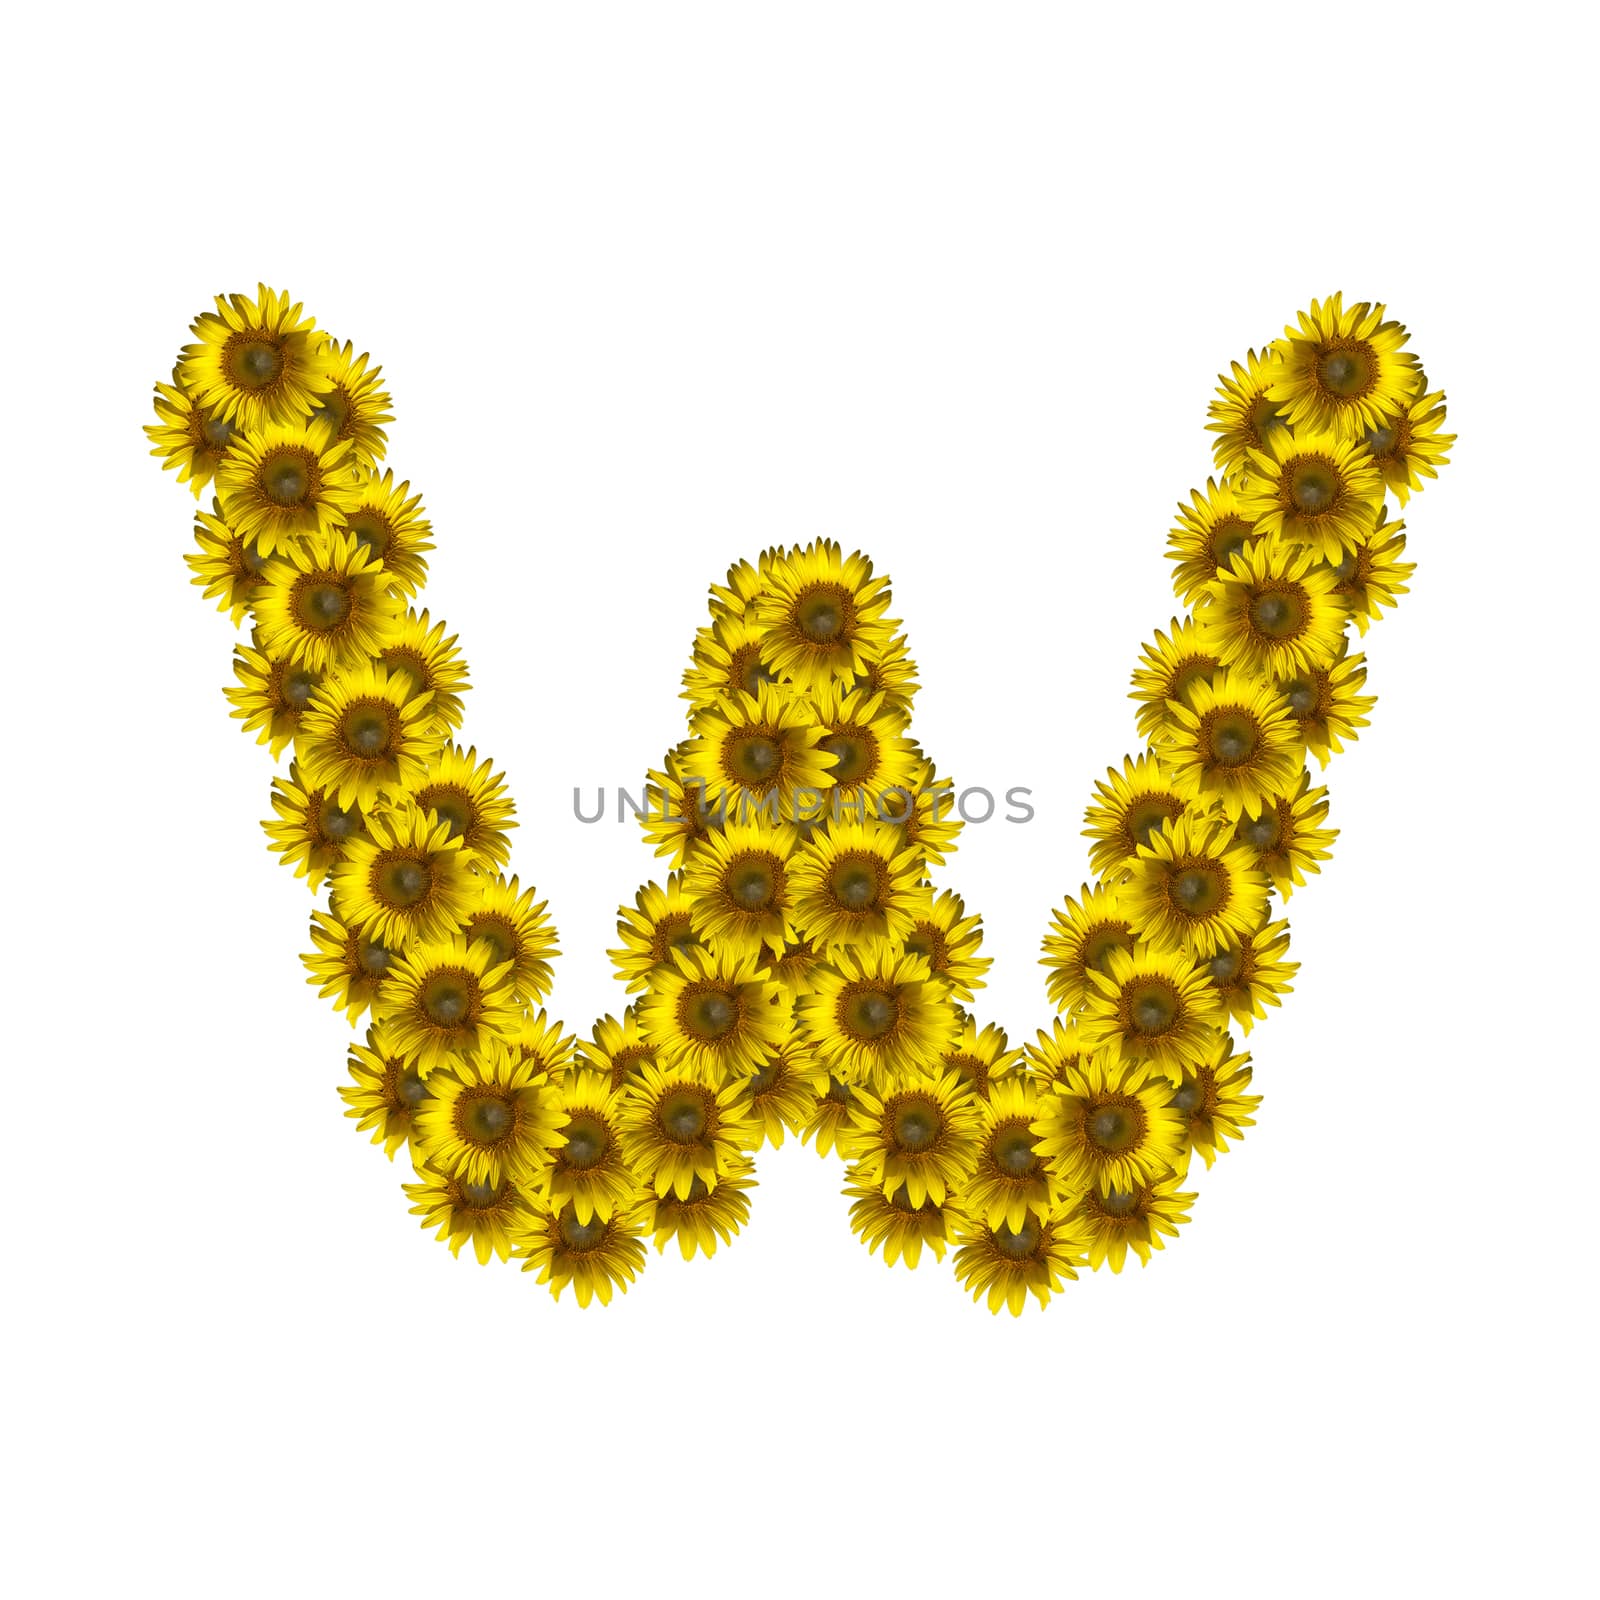 Sunflower alphabet isolated on white background, letter W